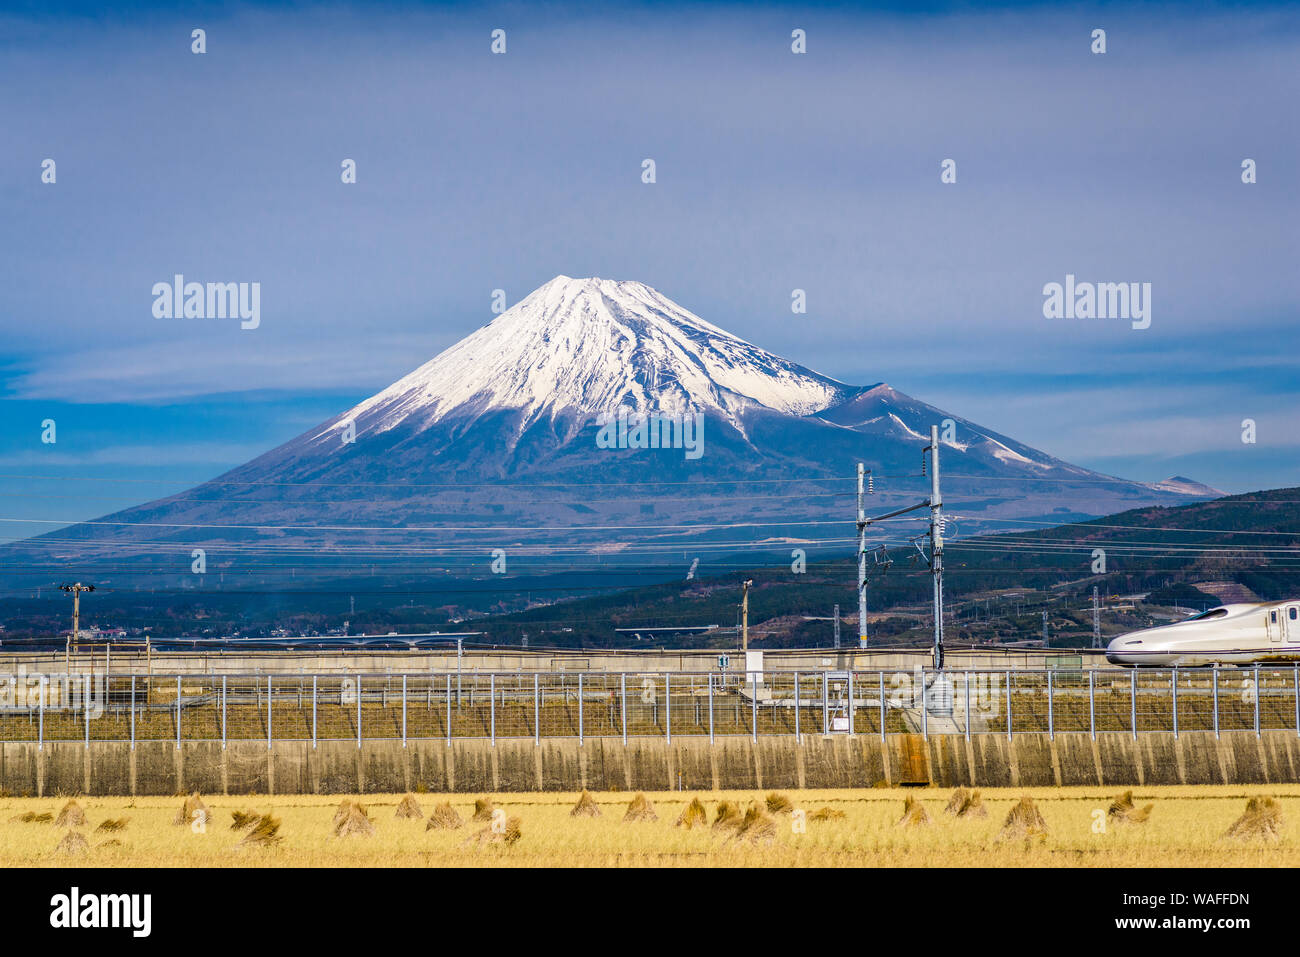 Mt. Fuji in Japan mit Ackerland und "Passing Train". Stockfoto